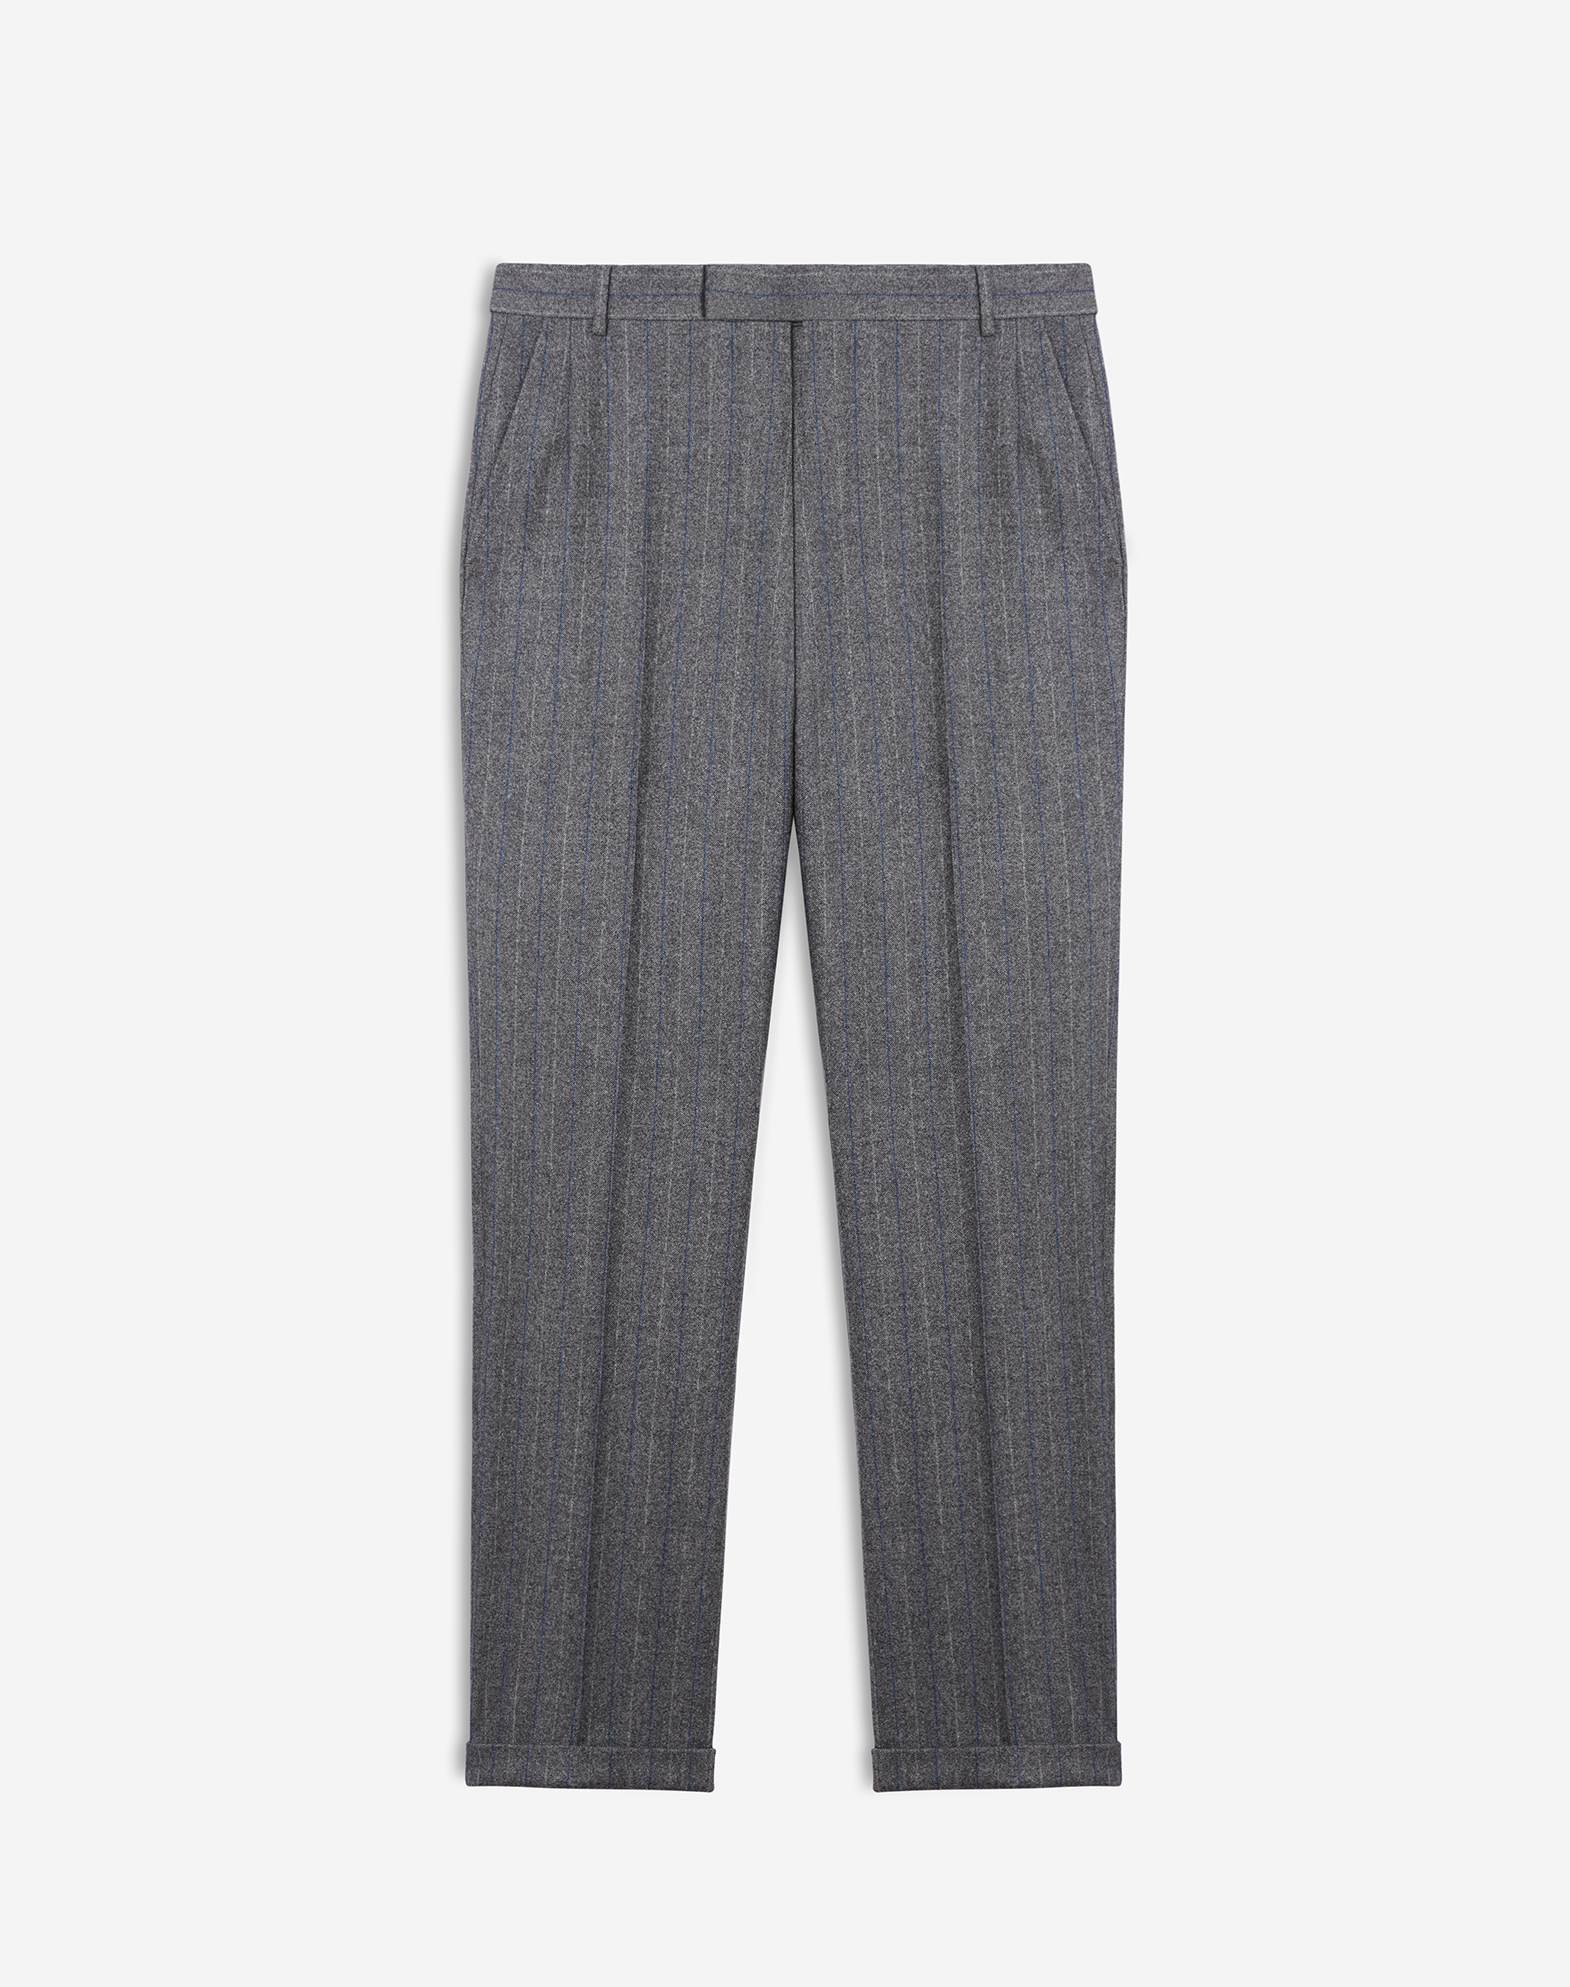 Dunhill Wool Cashmere Herringbone Belgravia Trousers In Grey